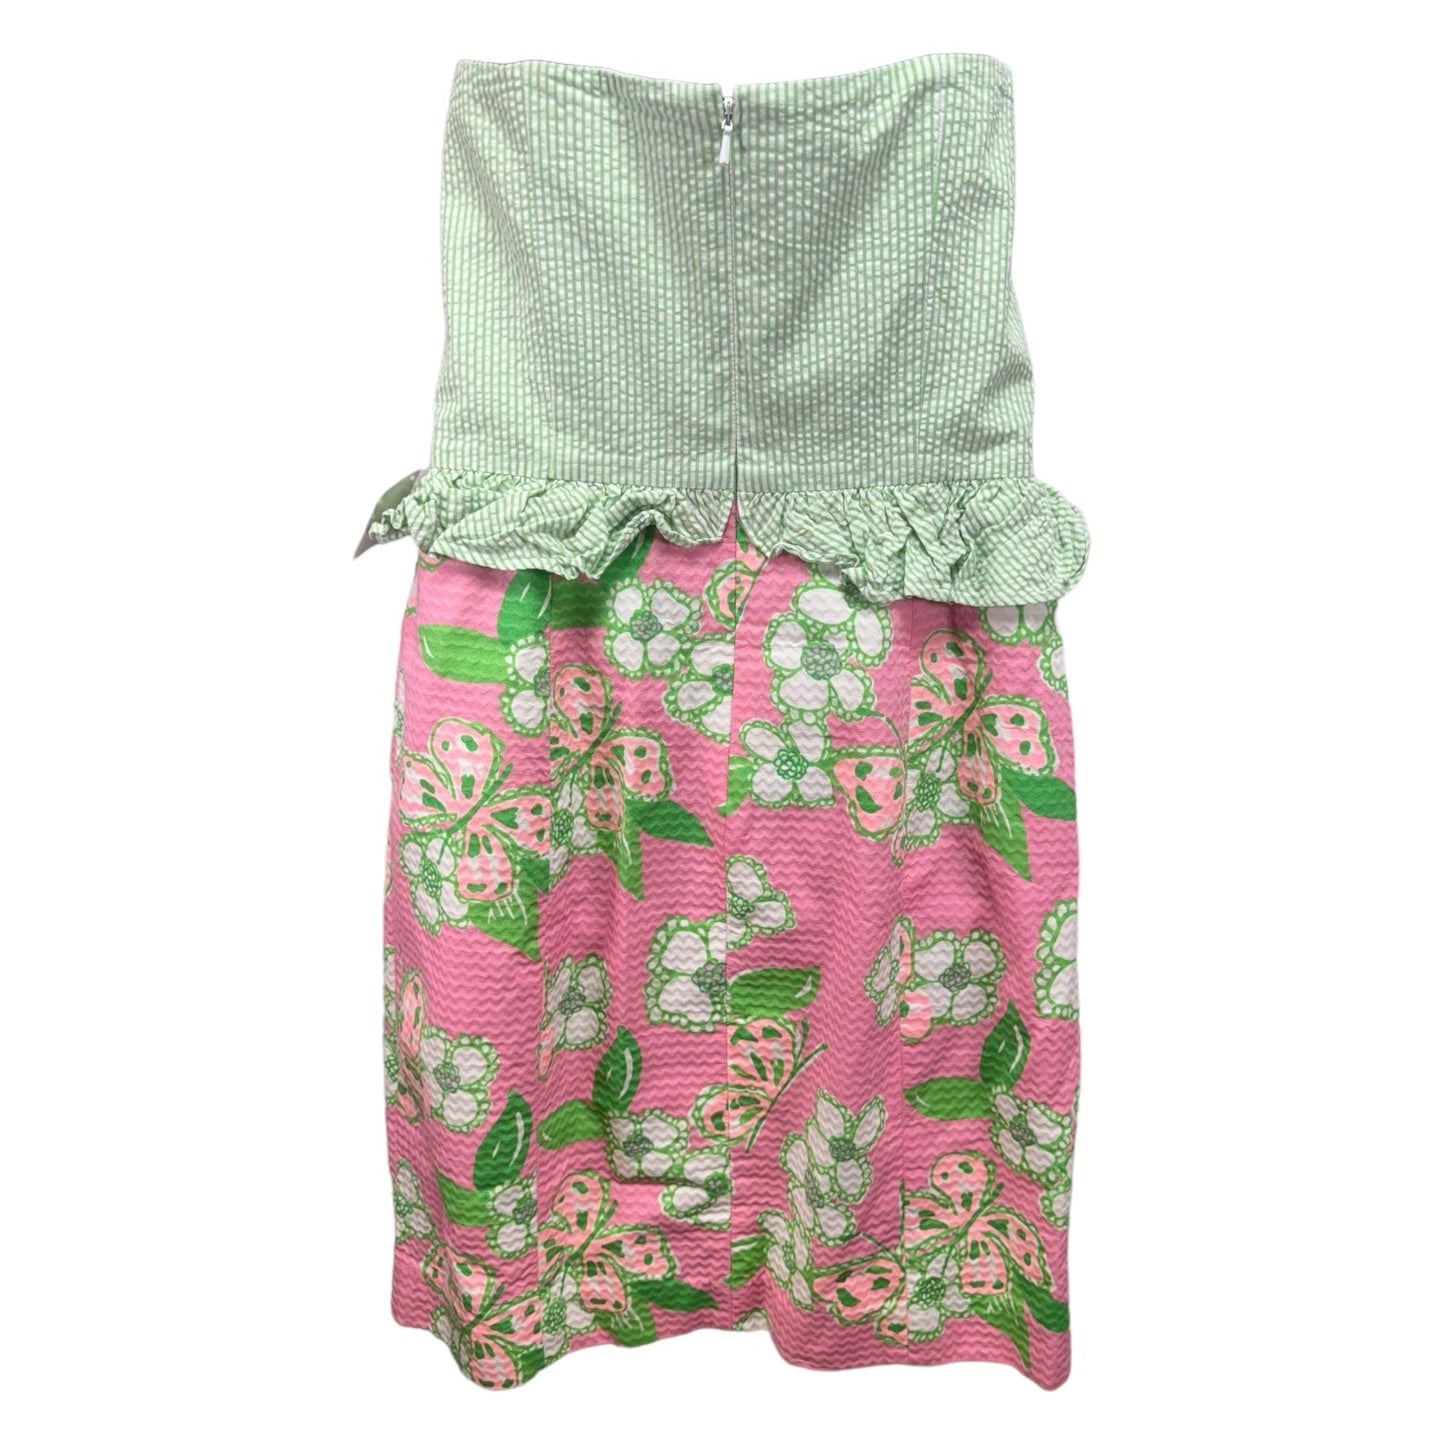 Lowe Peplum Dress in Pretty Pink Tootie Designer Lilly Pulitzer, Size 6